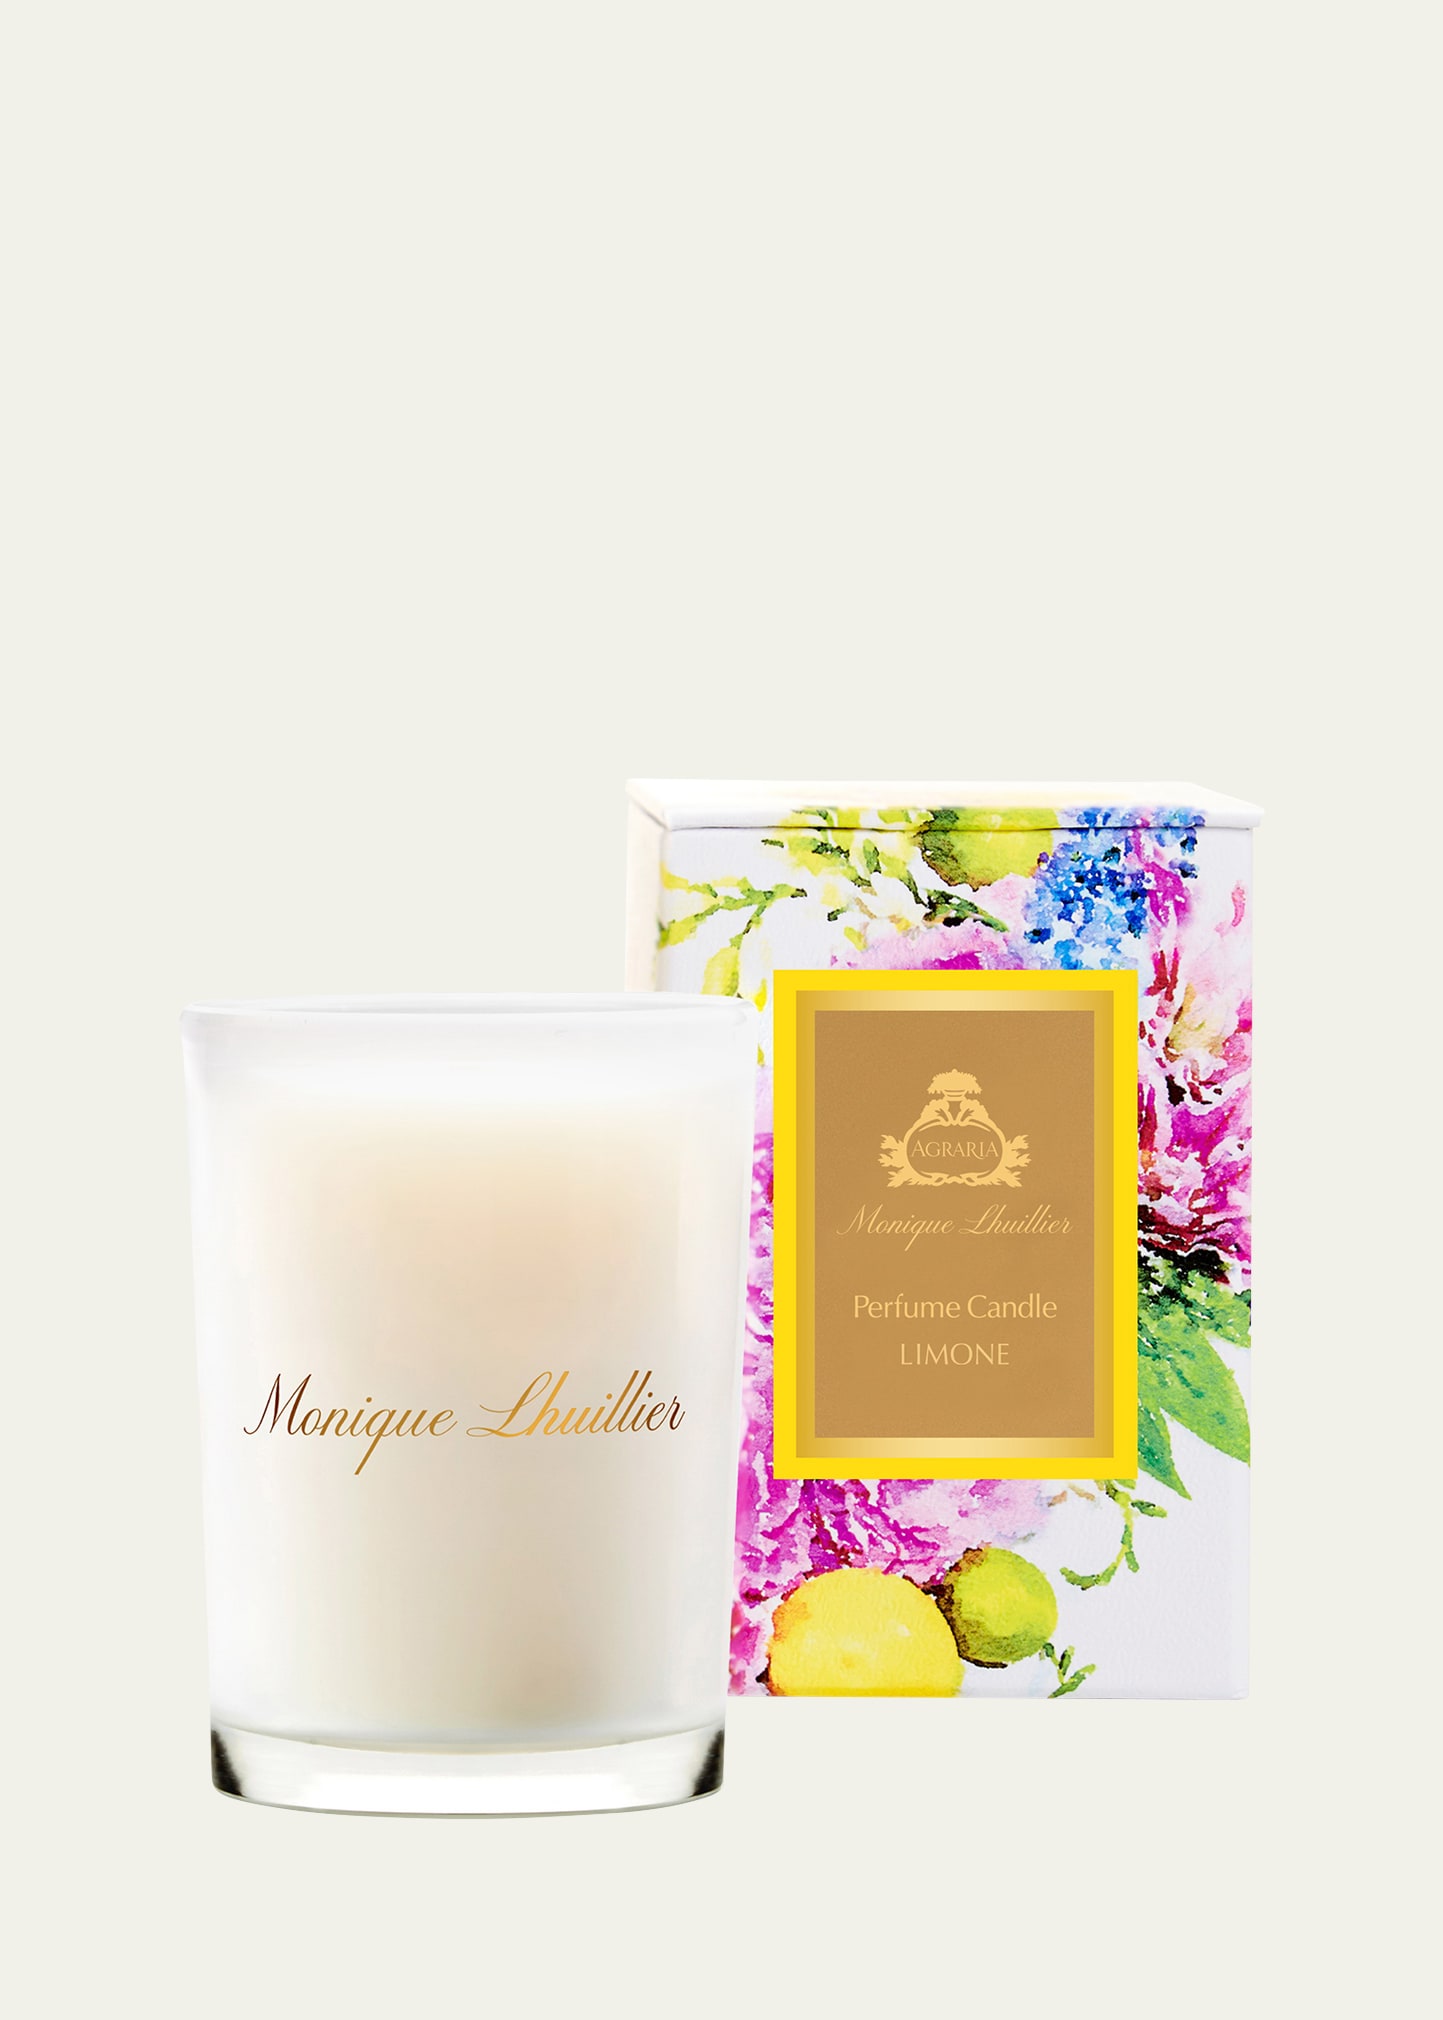 Agraria Monique Lhuillier Limone Perfume Candle, 7 oz.